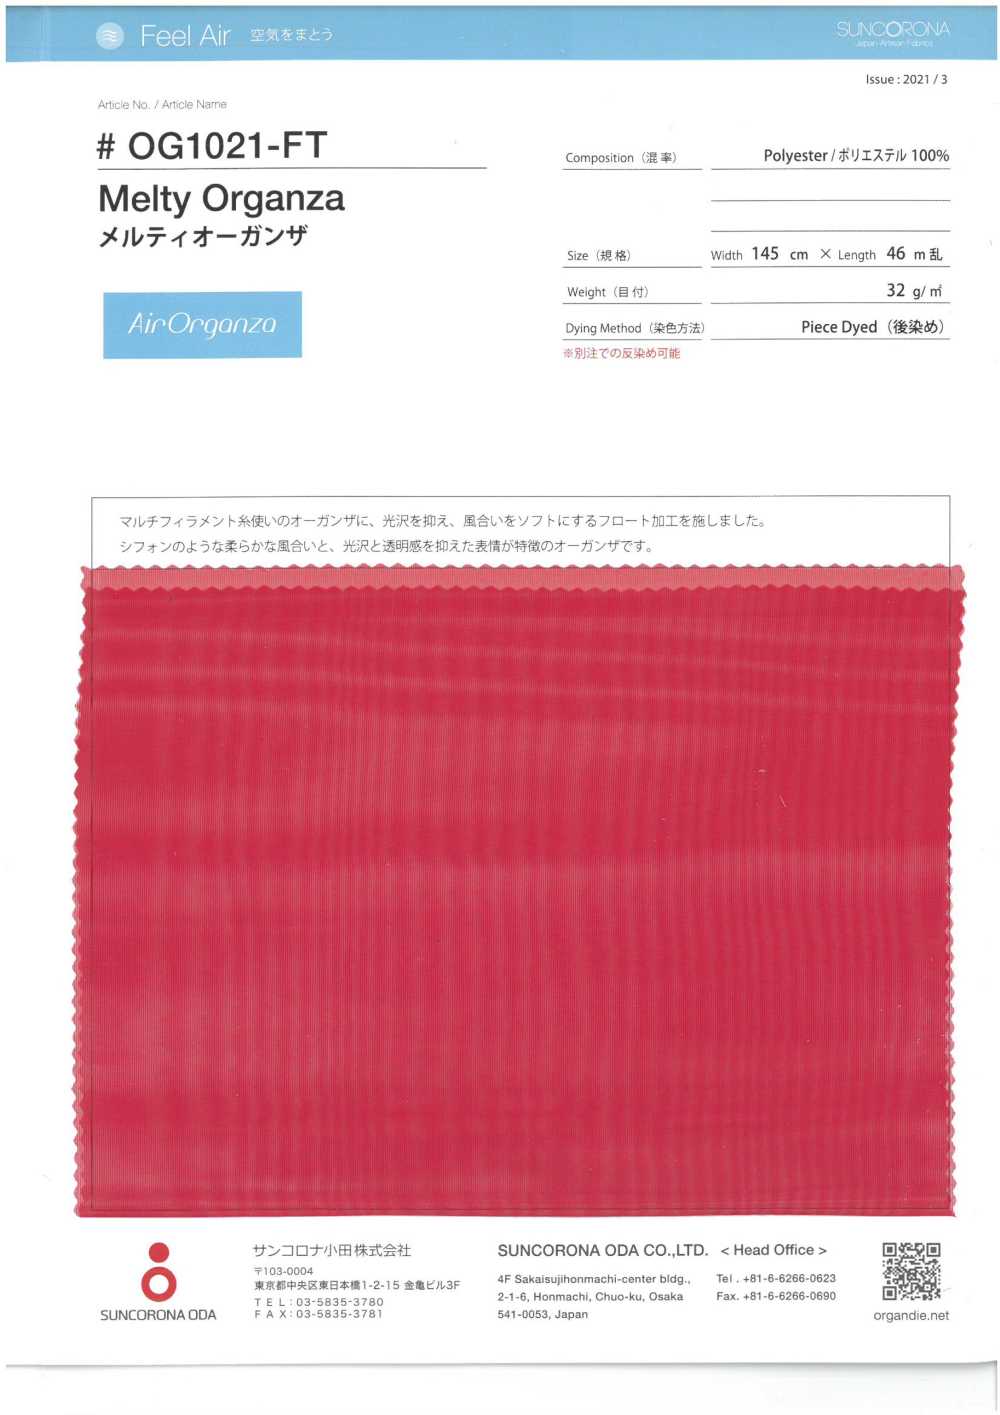 OG1021-FT Schmelzender Organza[Textilgewebe] Suncorona Oda